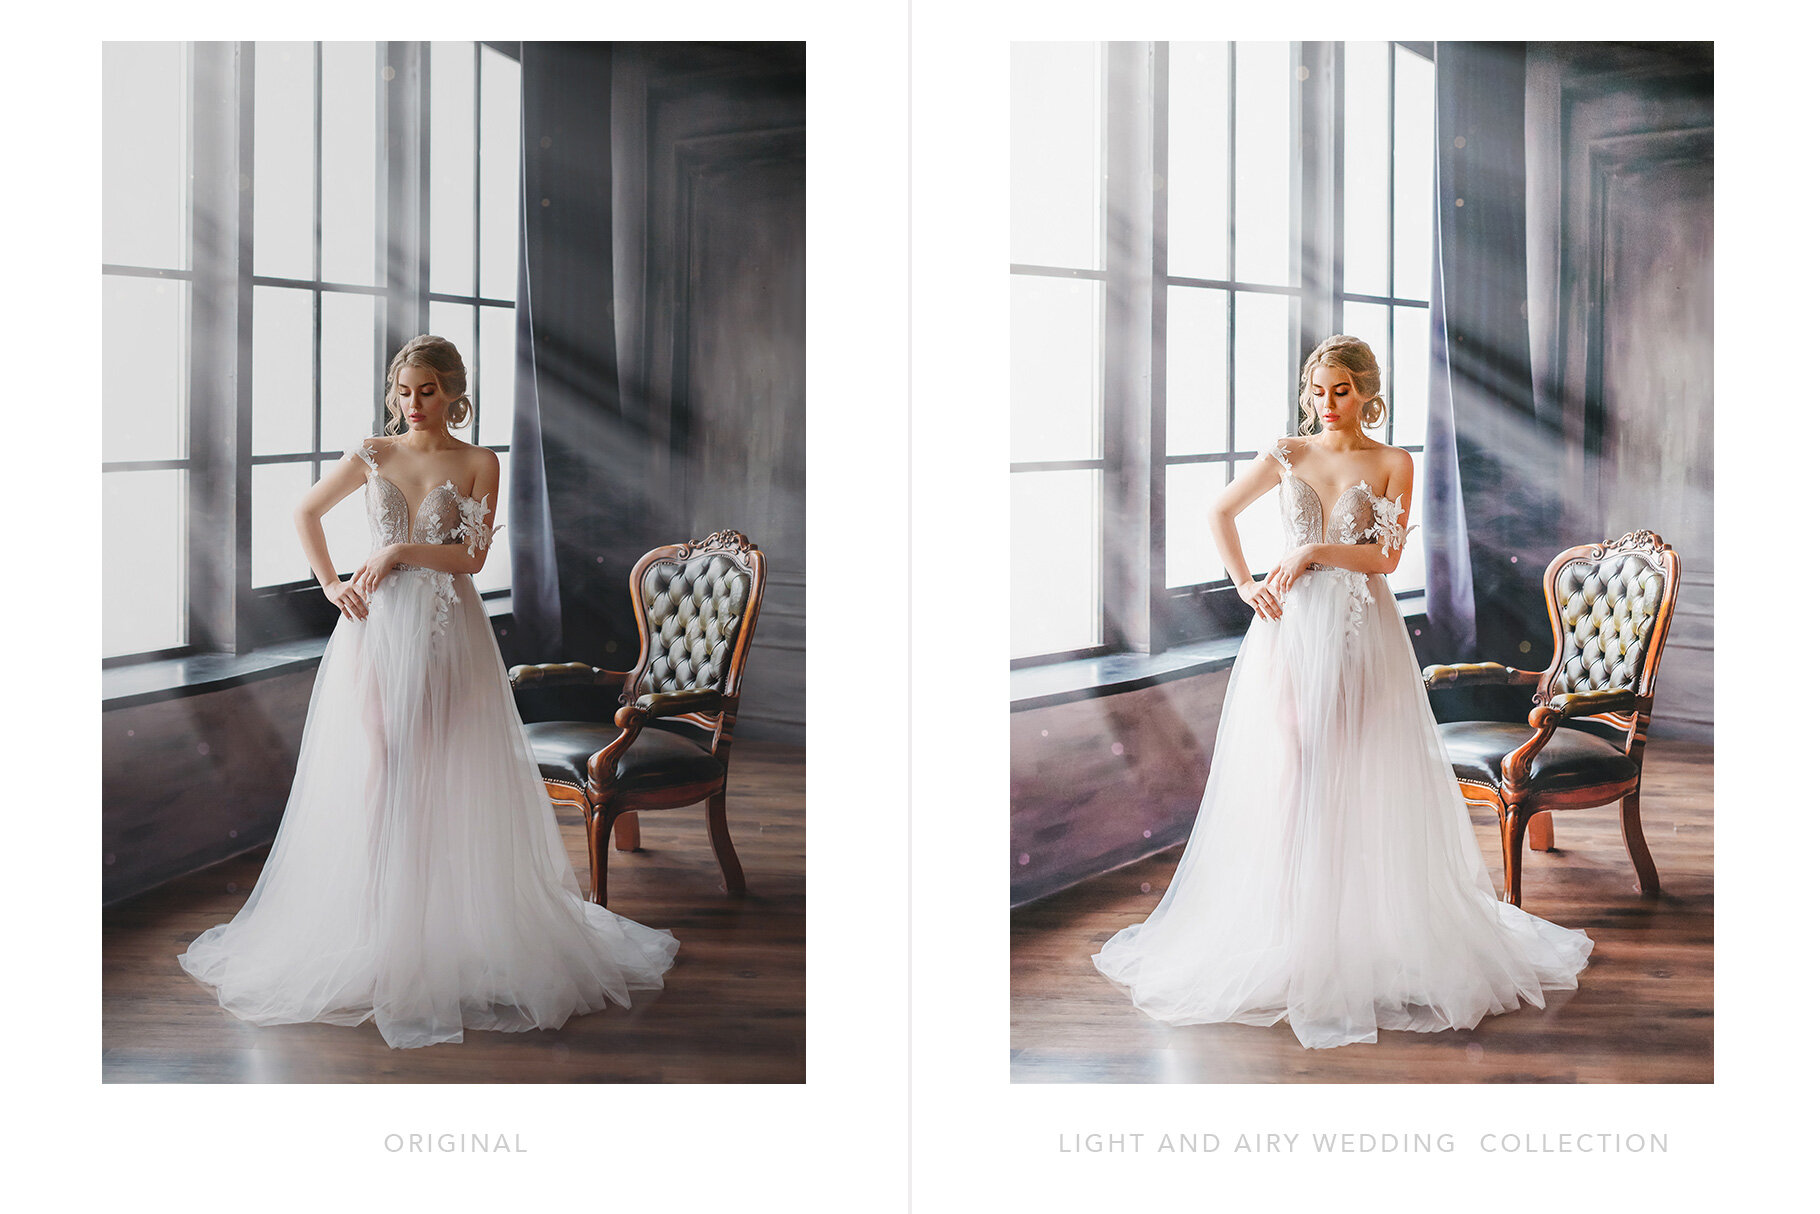 Light-and-Airy-Wedding-lightroom-presets-13.jpg